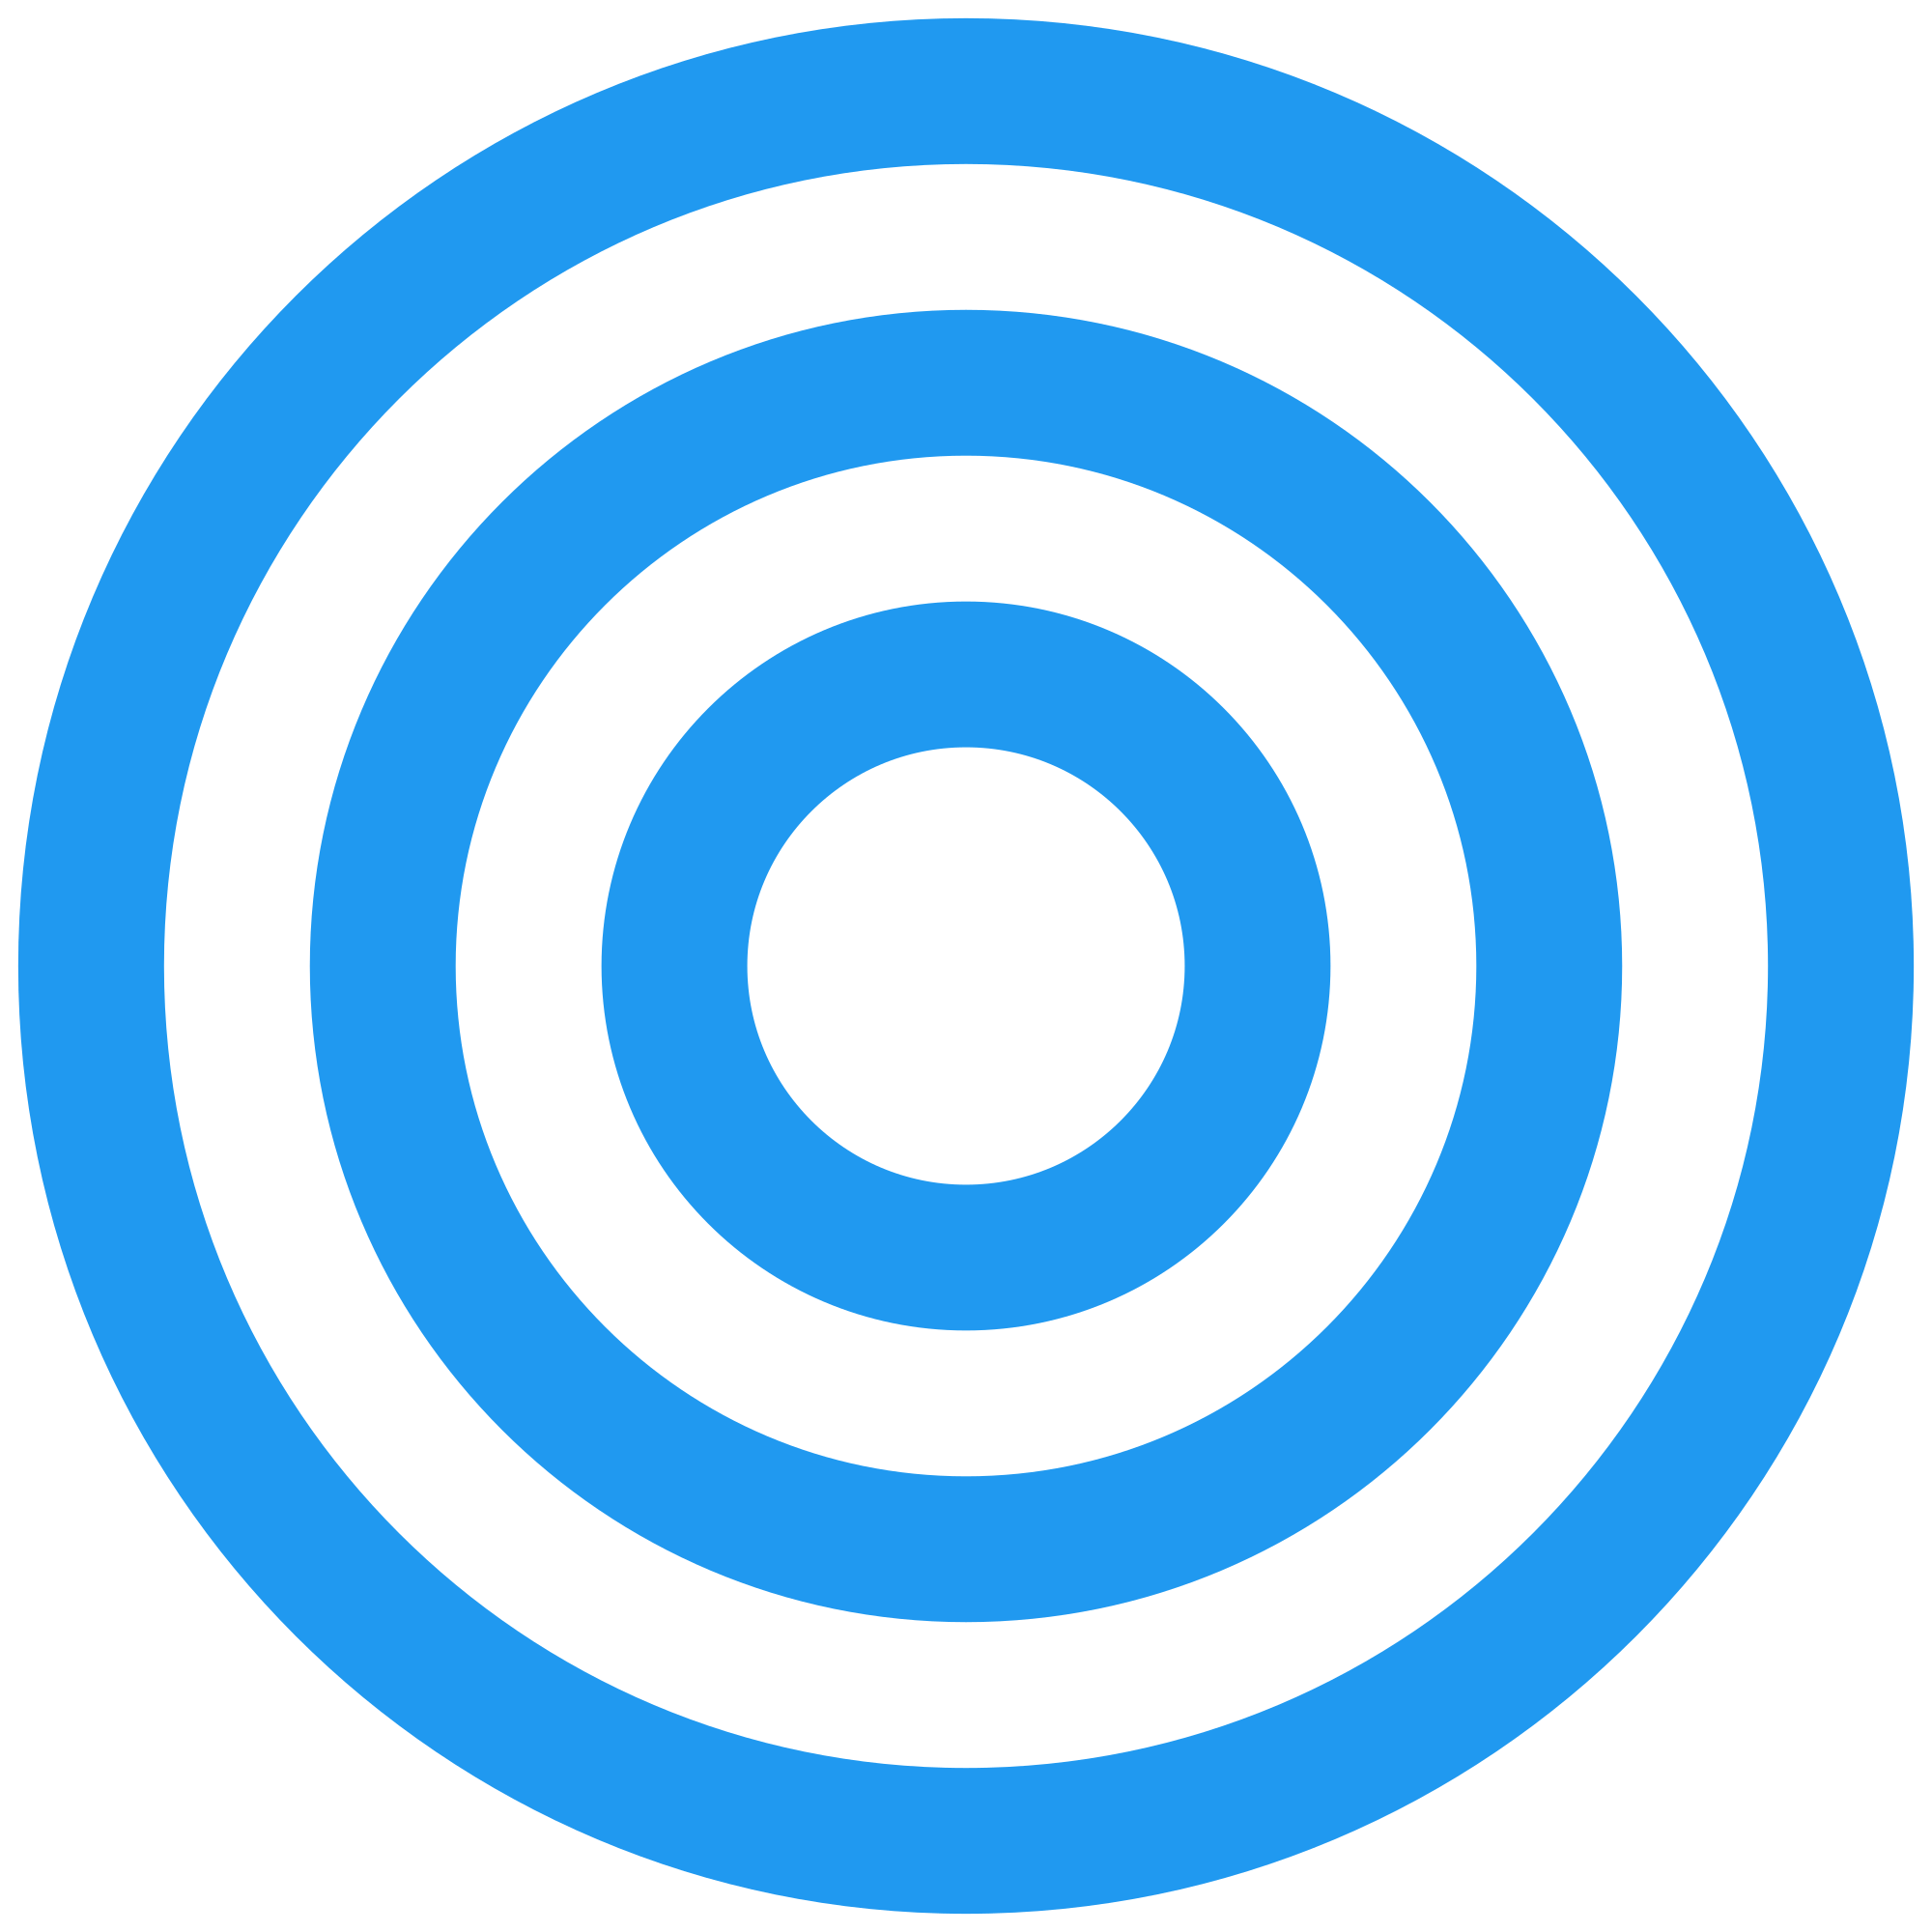 White with Blue Circle Logo - File:Urantia three-concentric-blue-circles-on-white symbol.svg ...